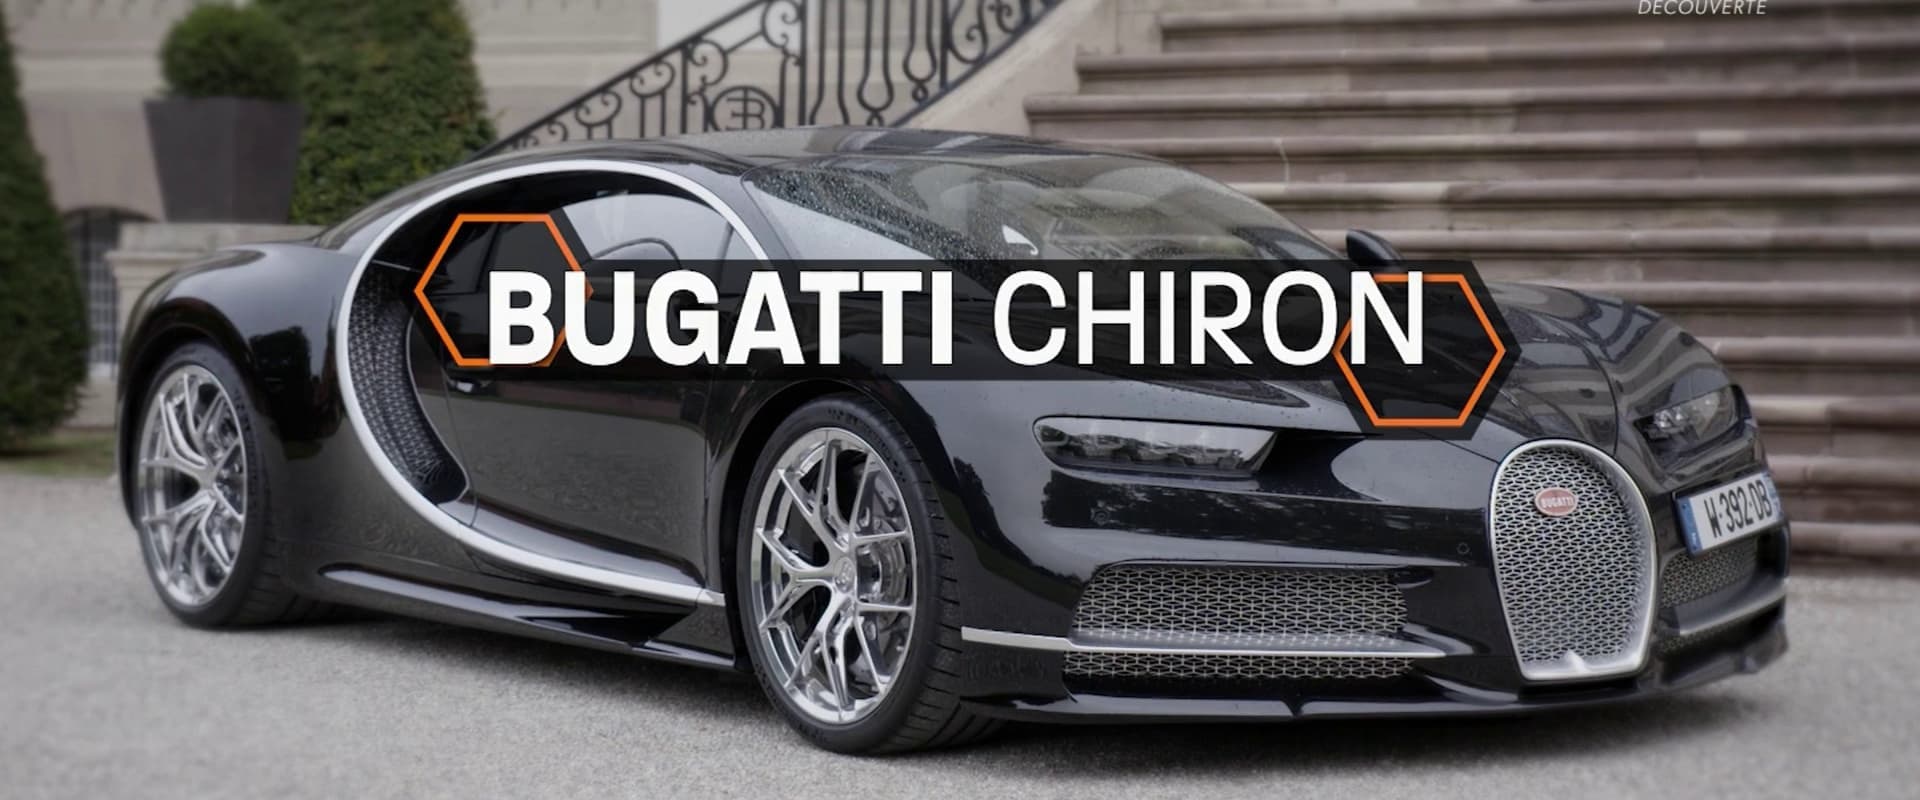 Bugatti Chiron - Inside the Factory